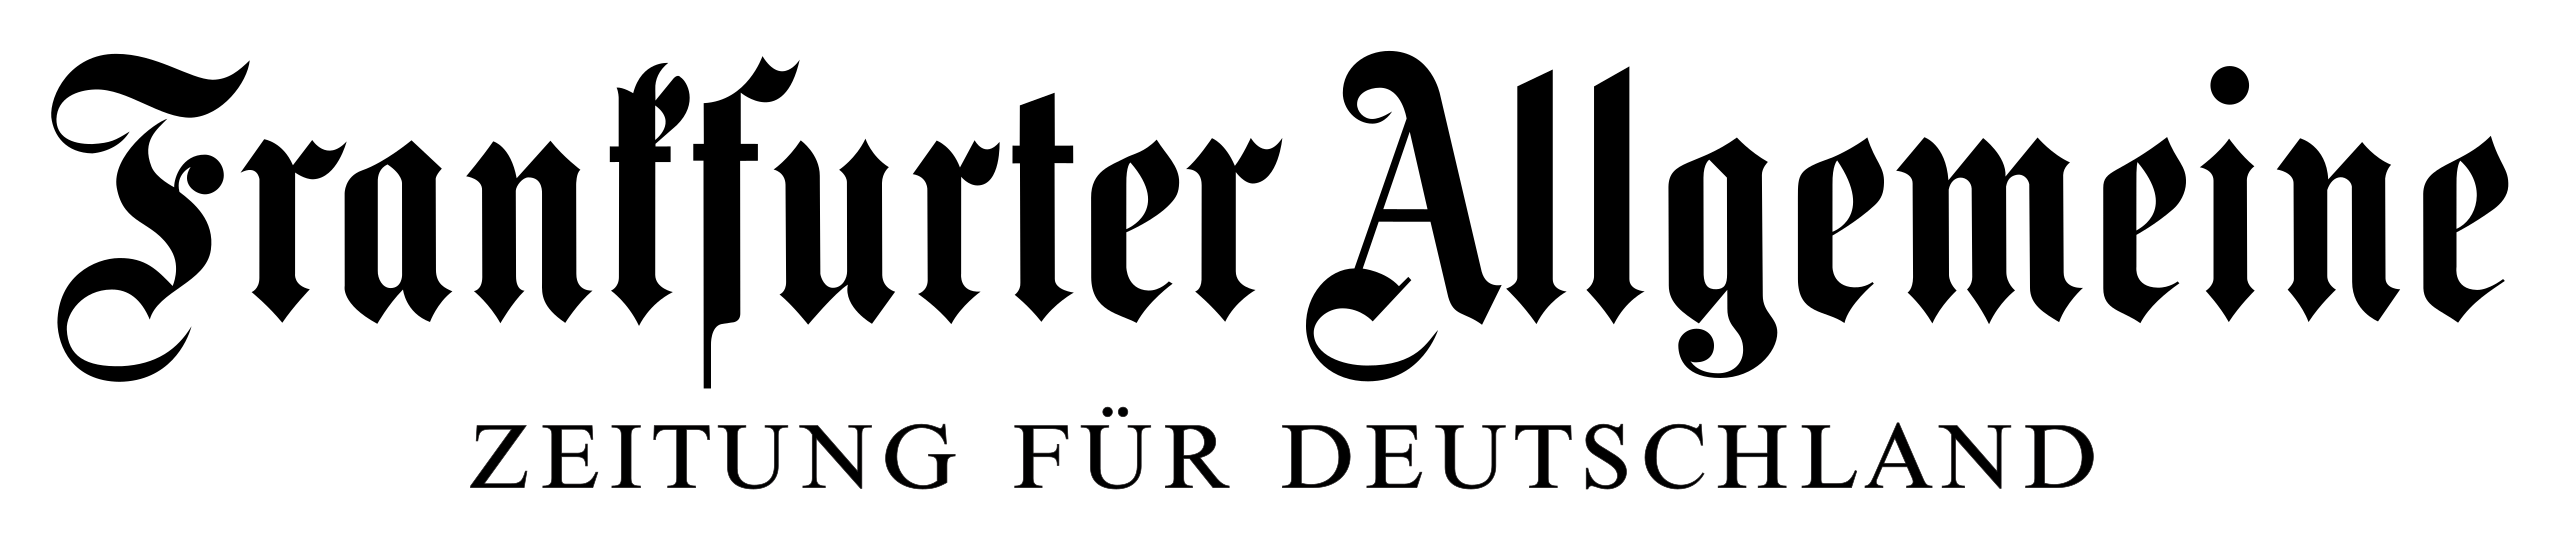 Frankfurter Allgemeine logo svg